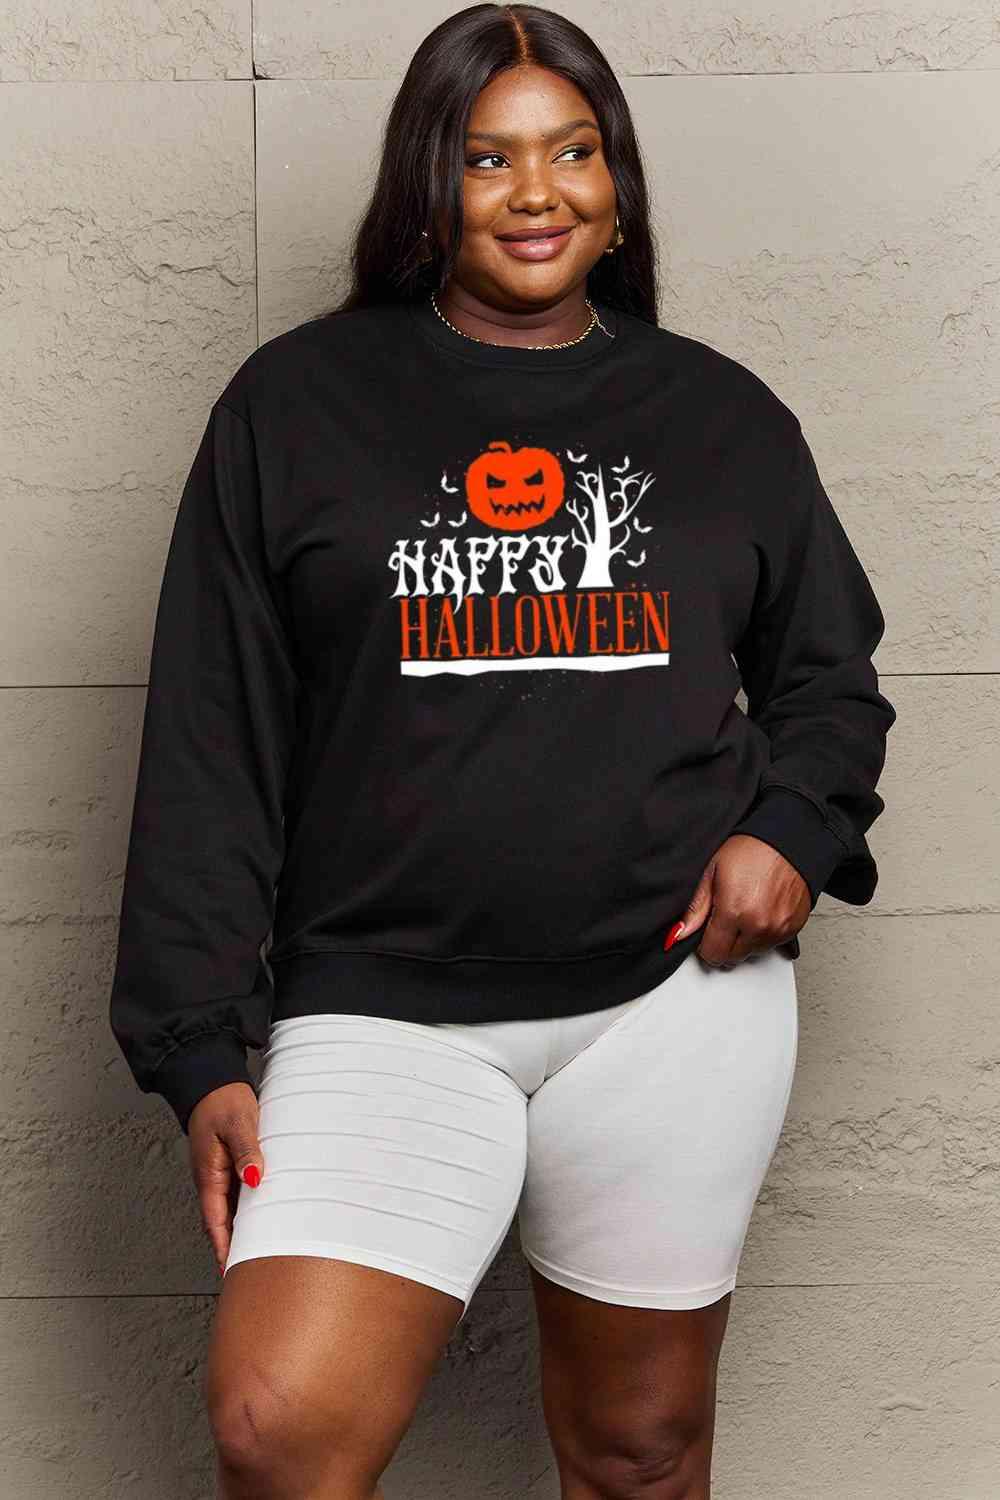 Simply Love Full Size HAPPY HALLOWEEN Graphic Sweatshirt - Immenzive